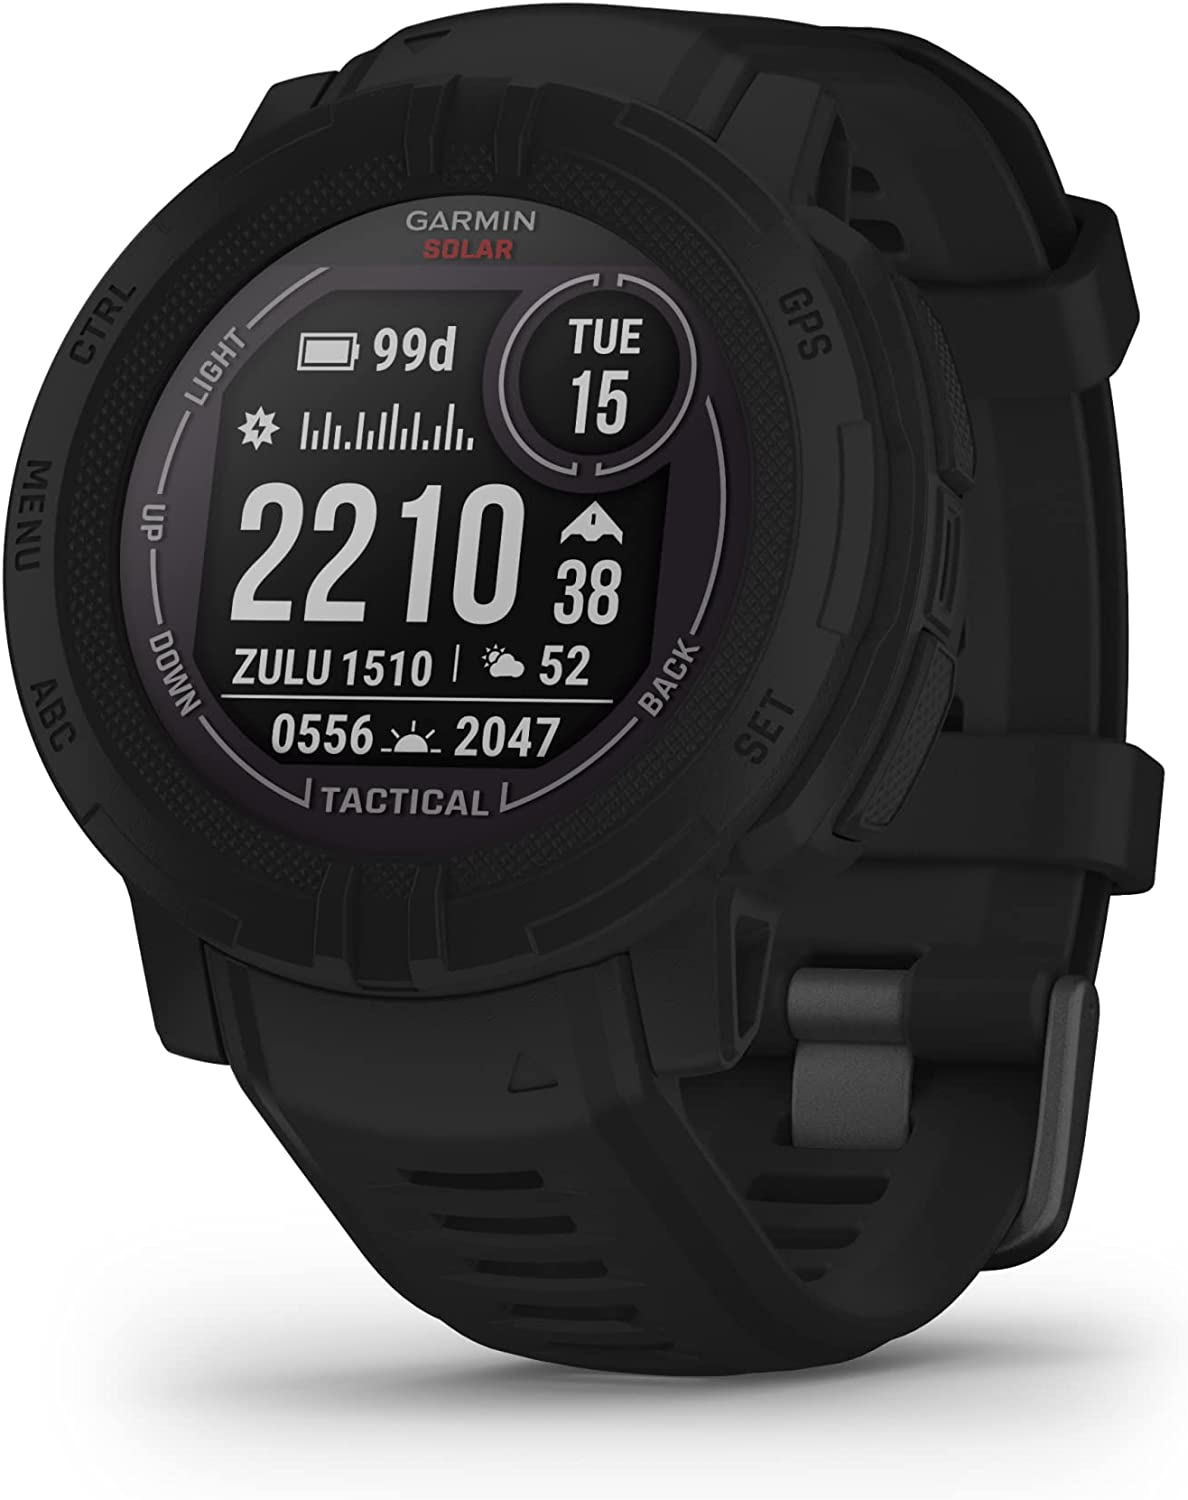 Buy Garmin Instinct 2 GPS Smartwatch in India at lowest Price |  IMASTUDENT.COM